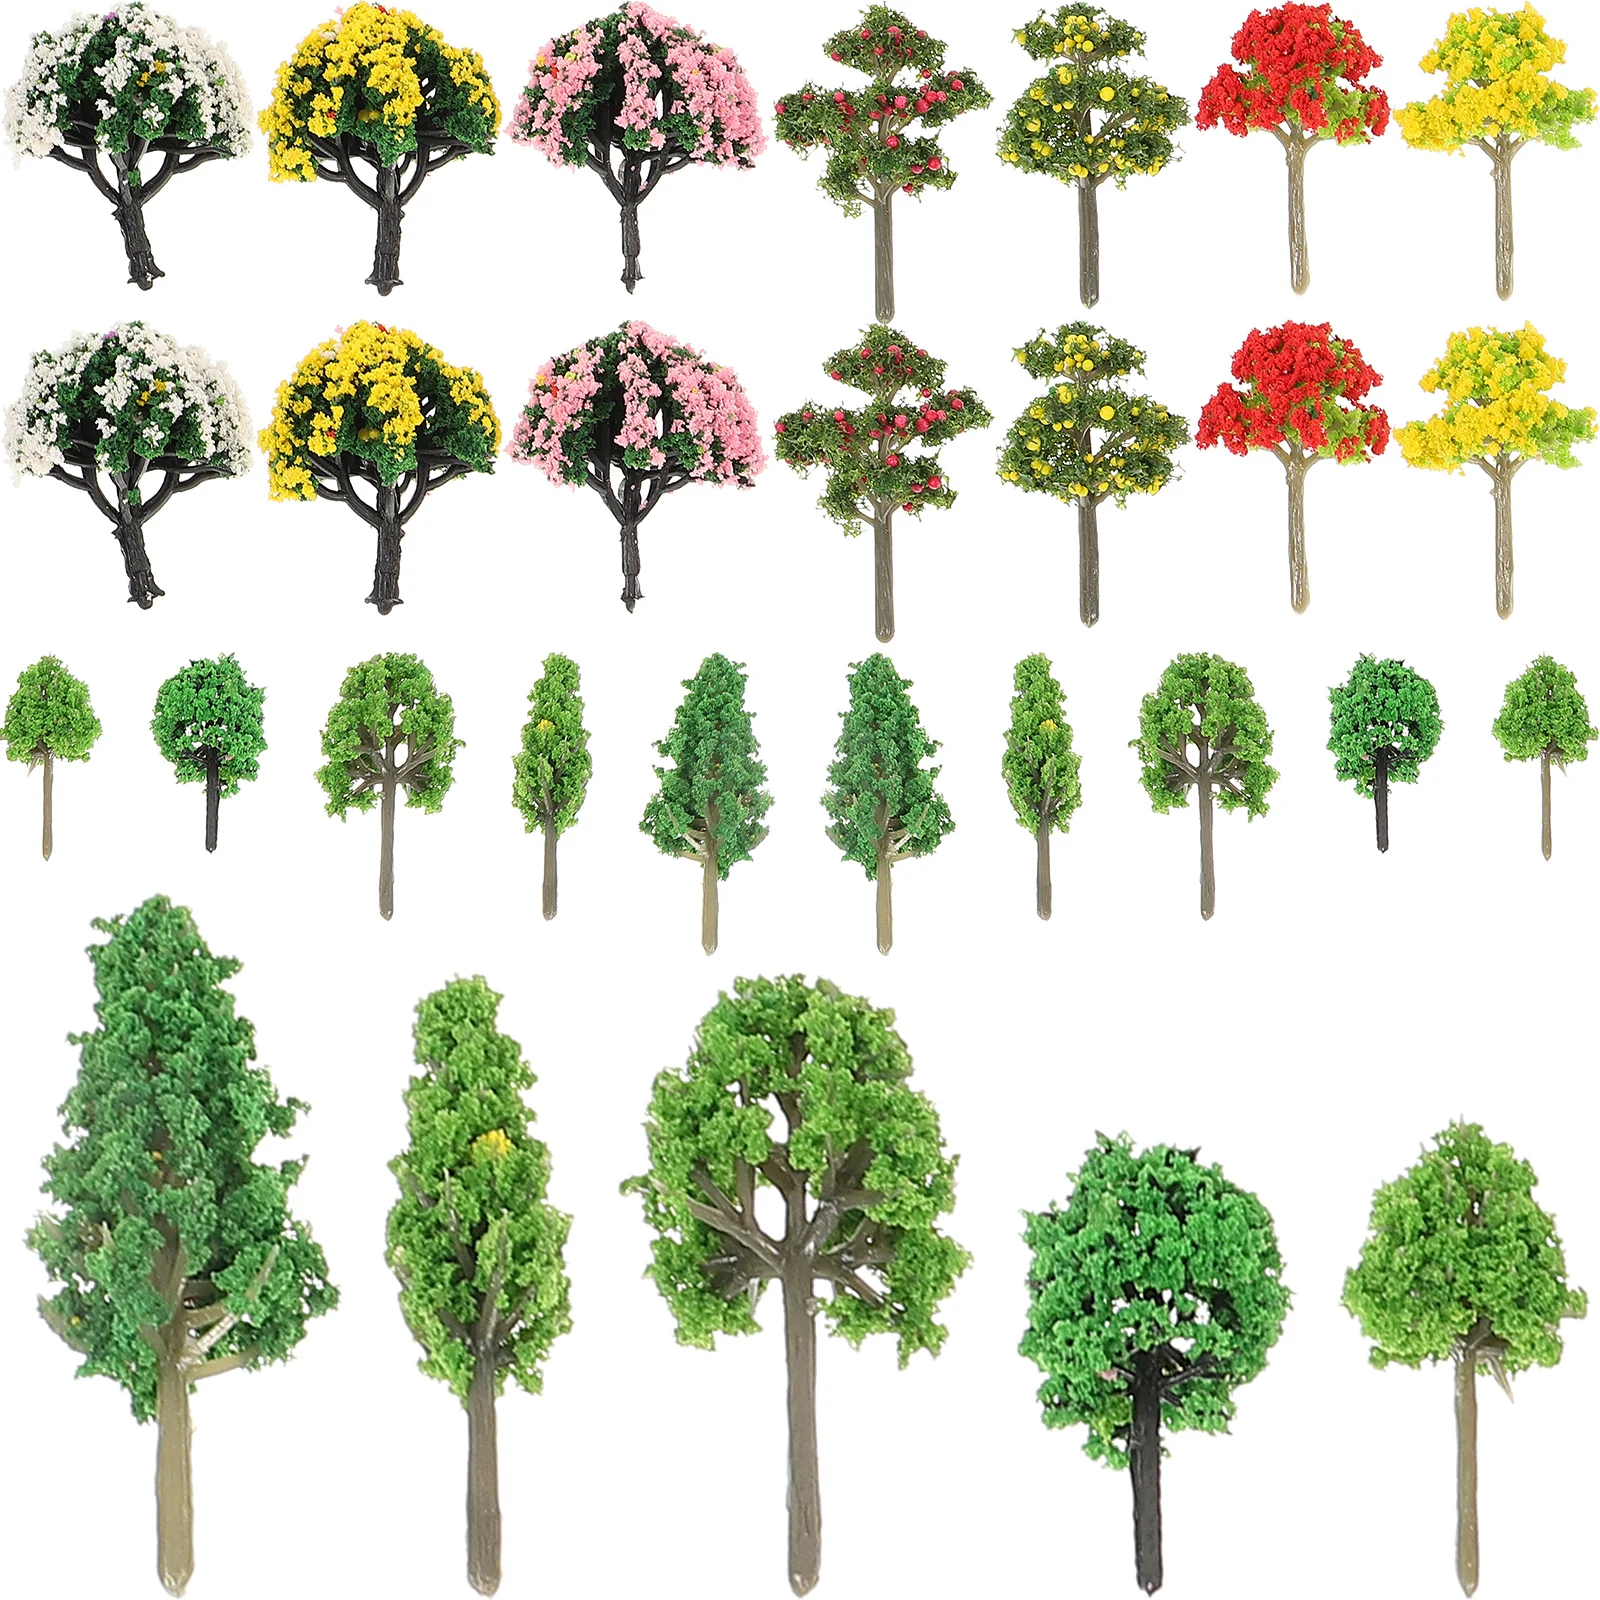 

60 Pcs Artificial Plants Ornaments Landscape Model Tree Material Architectural Realistic Trees Plastic Mini Fake